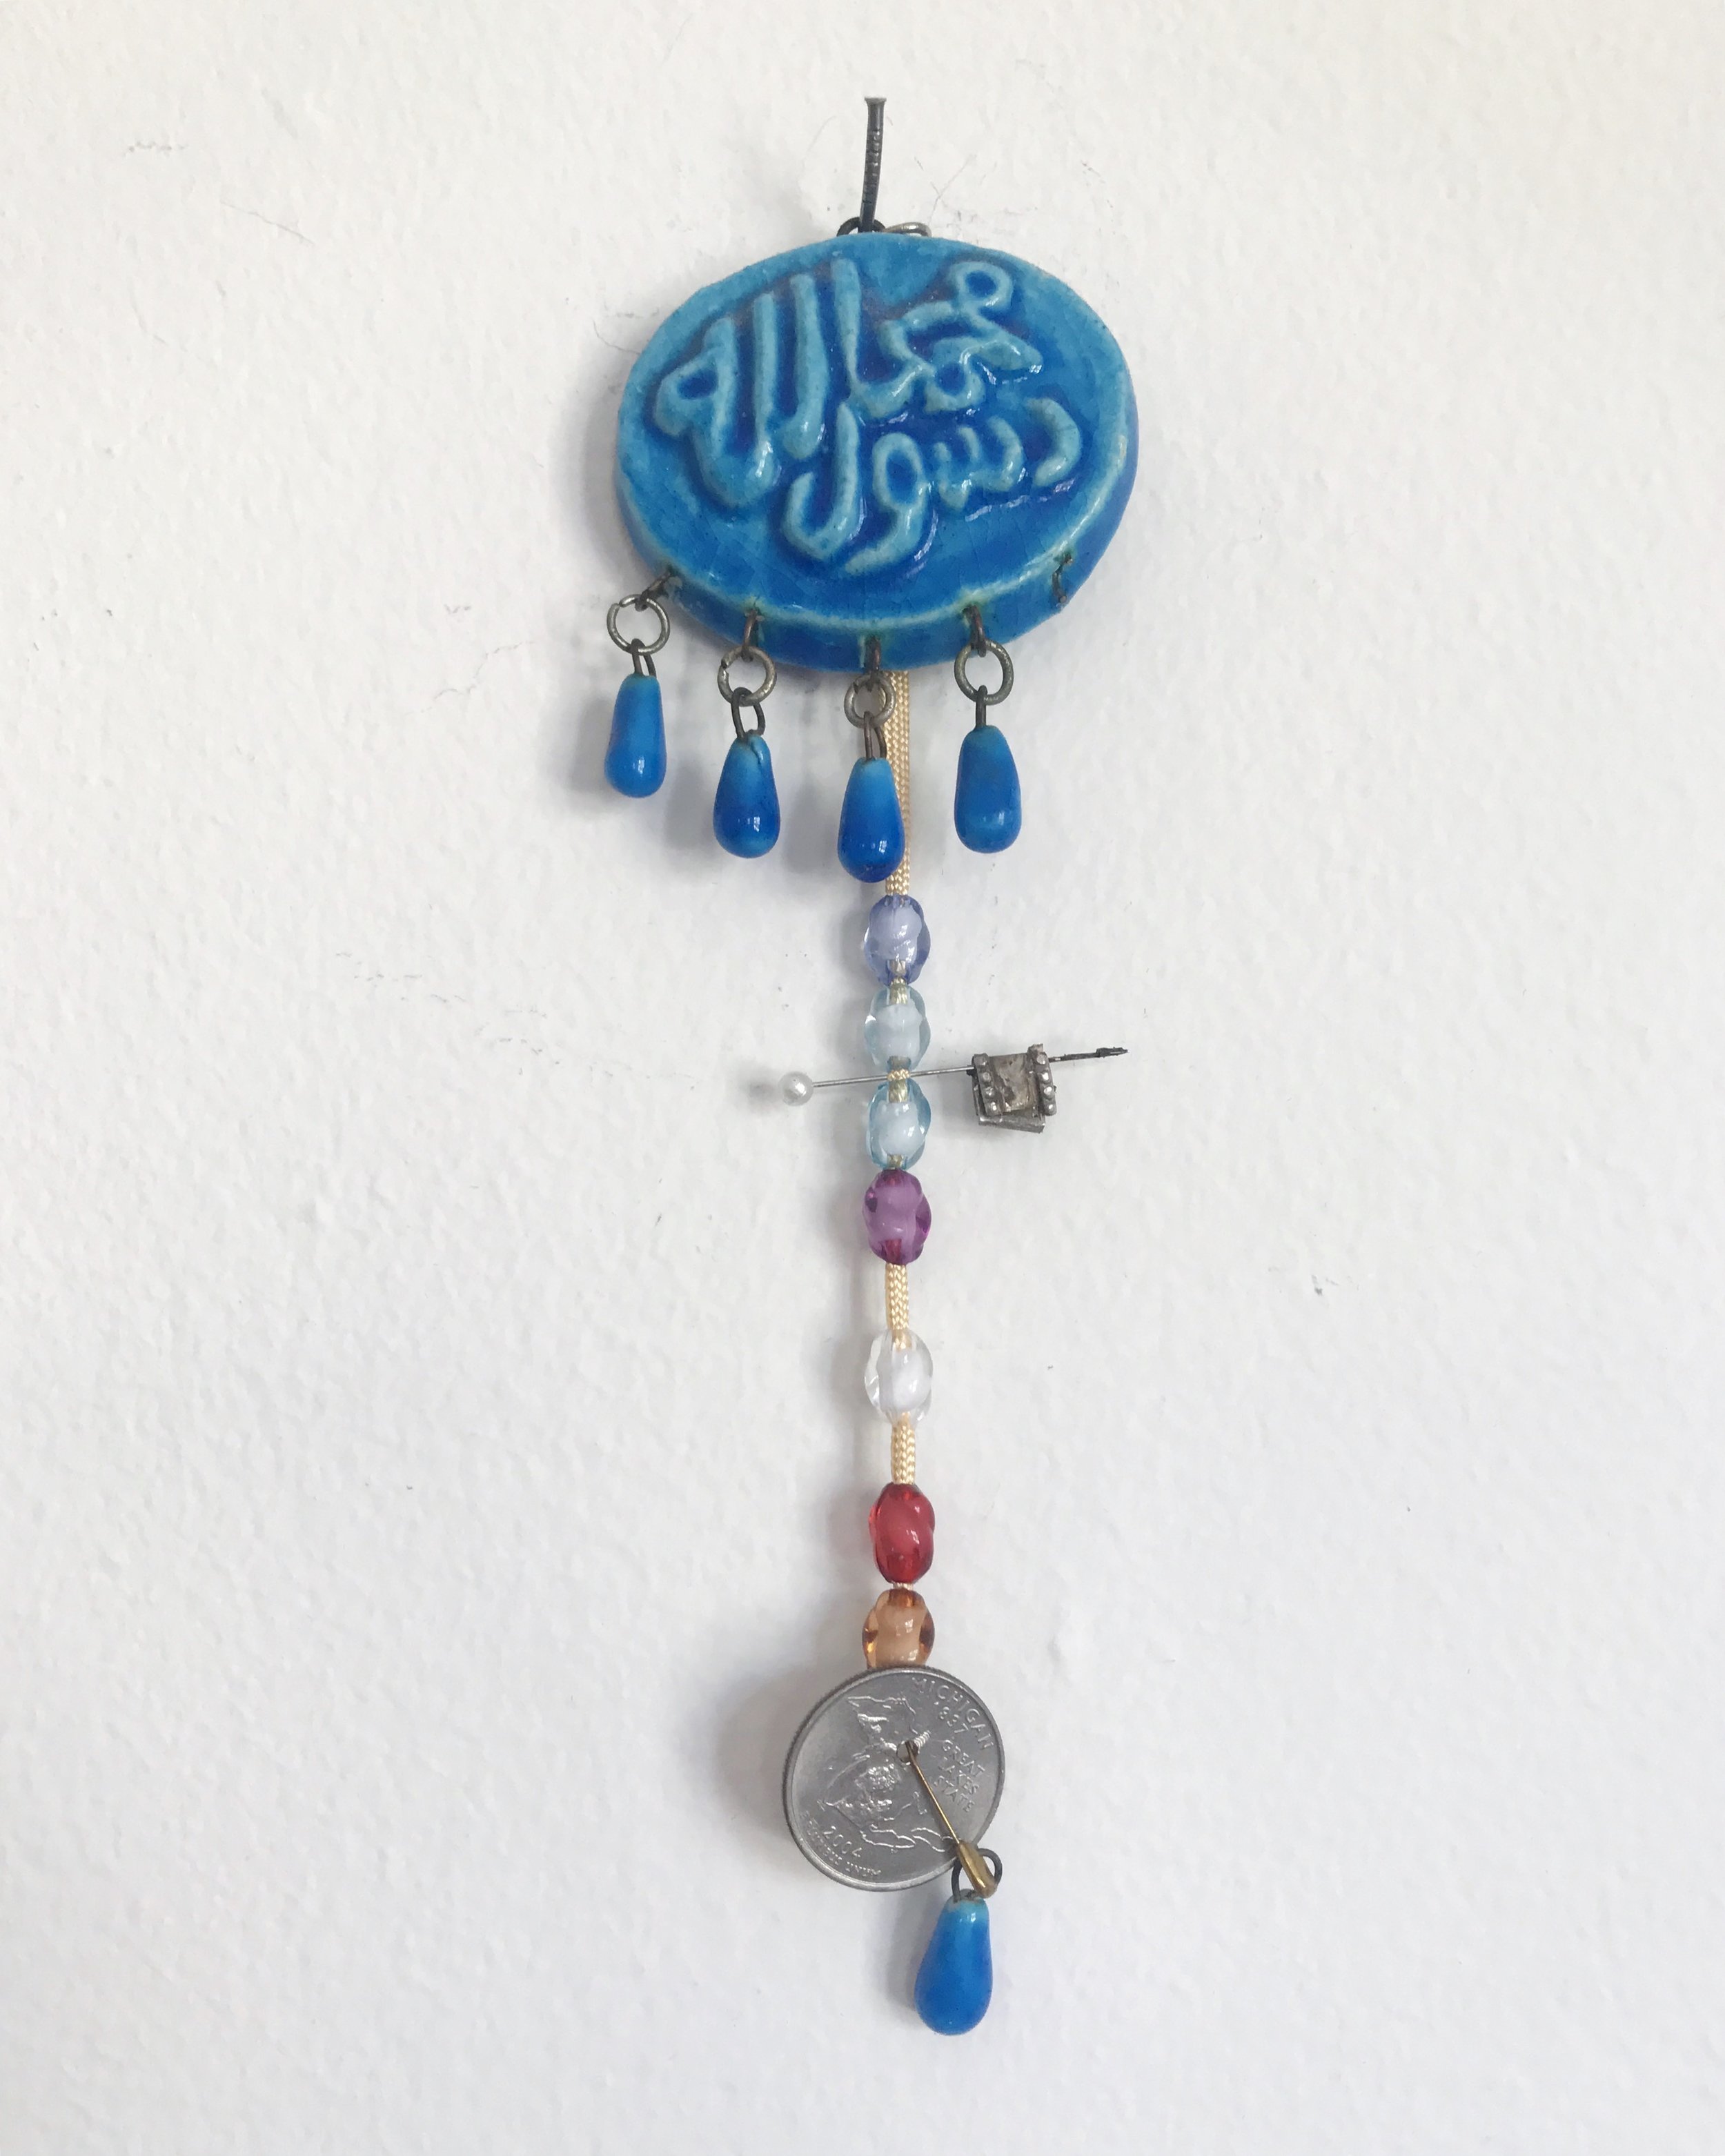  2015  ceramic coin, ceramic sequins, dressmaker pin, plastic beads from Mecca, Saudi Arabia, United States currency (Michigan edition quarter) 